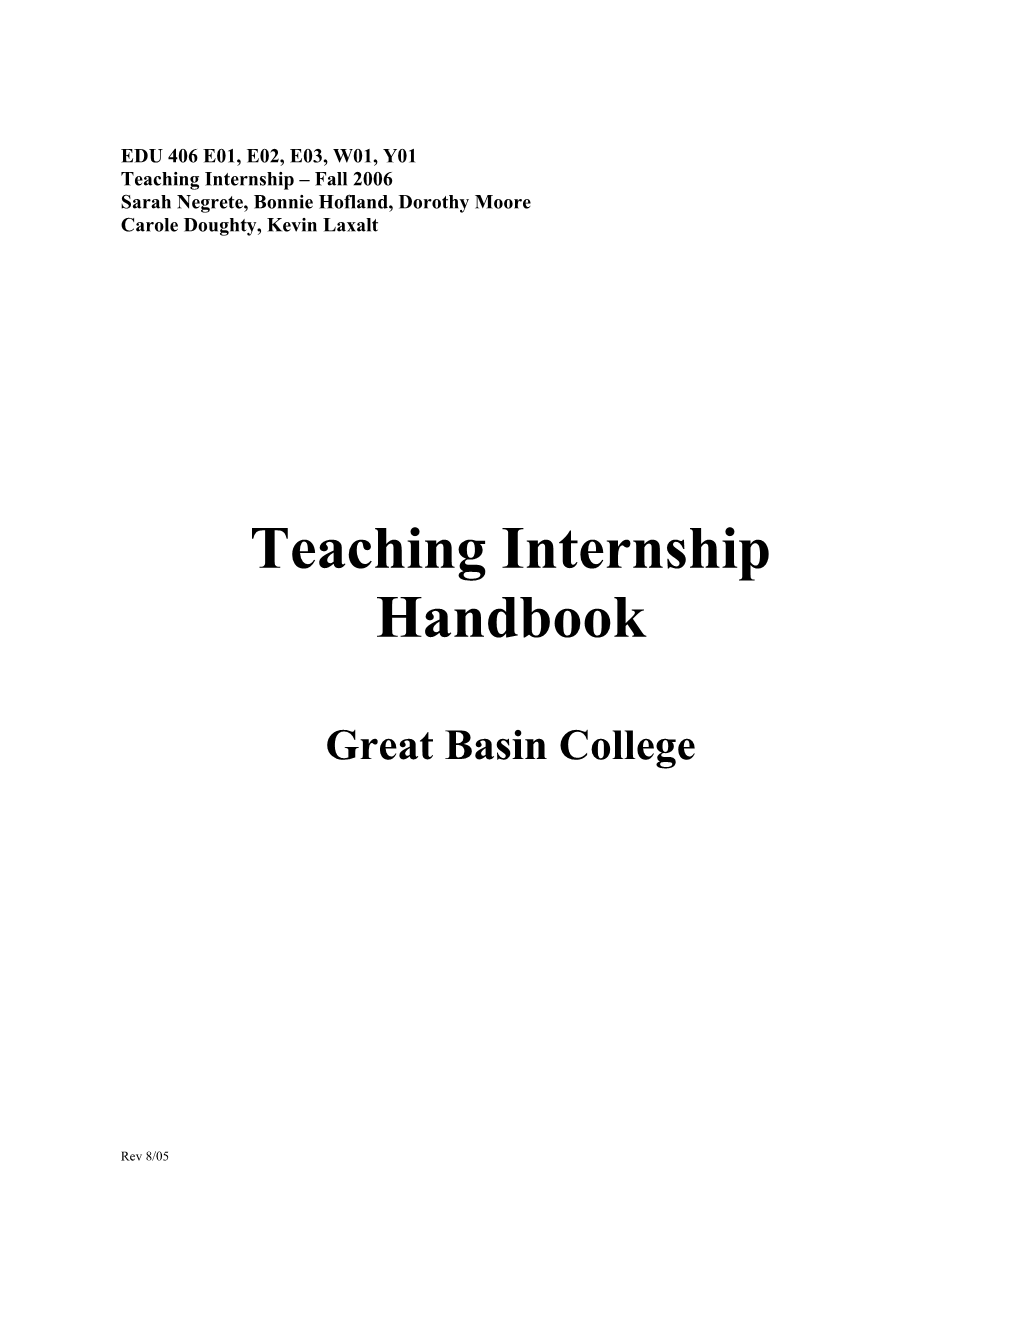 Teaching Internship Handbook